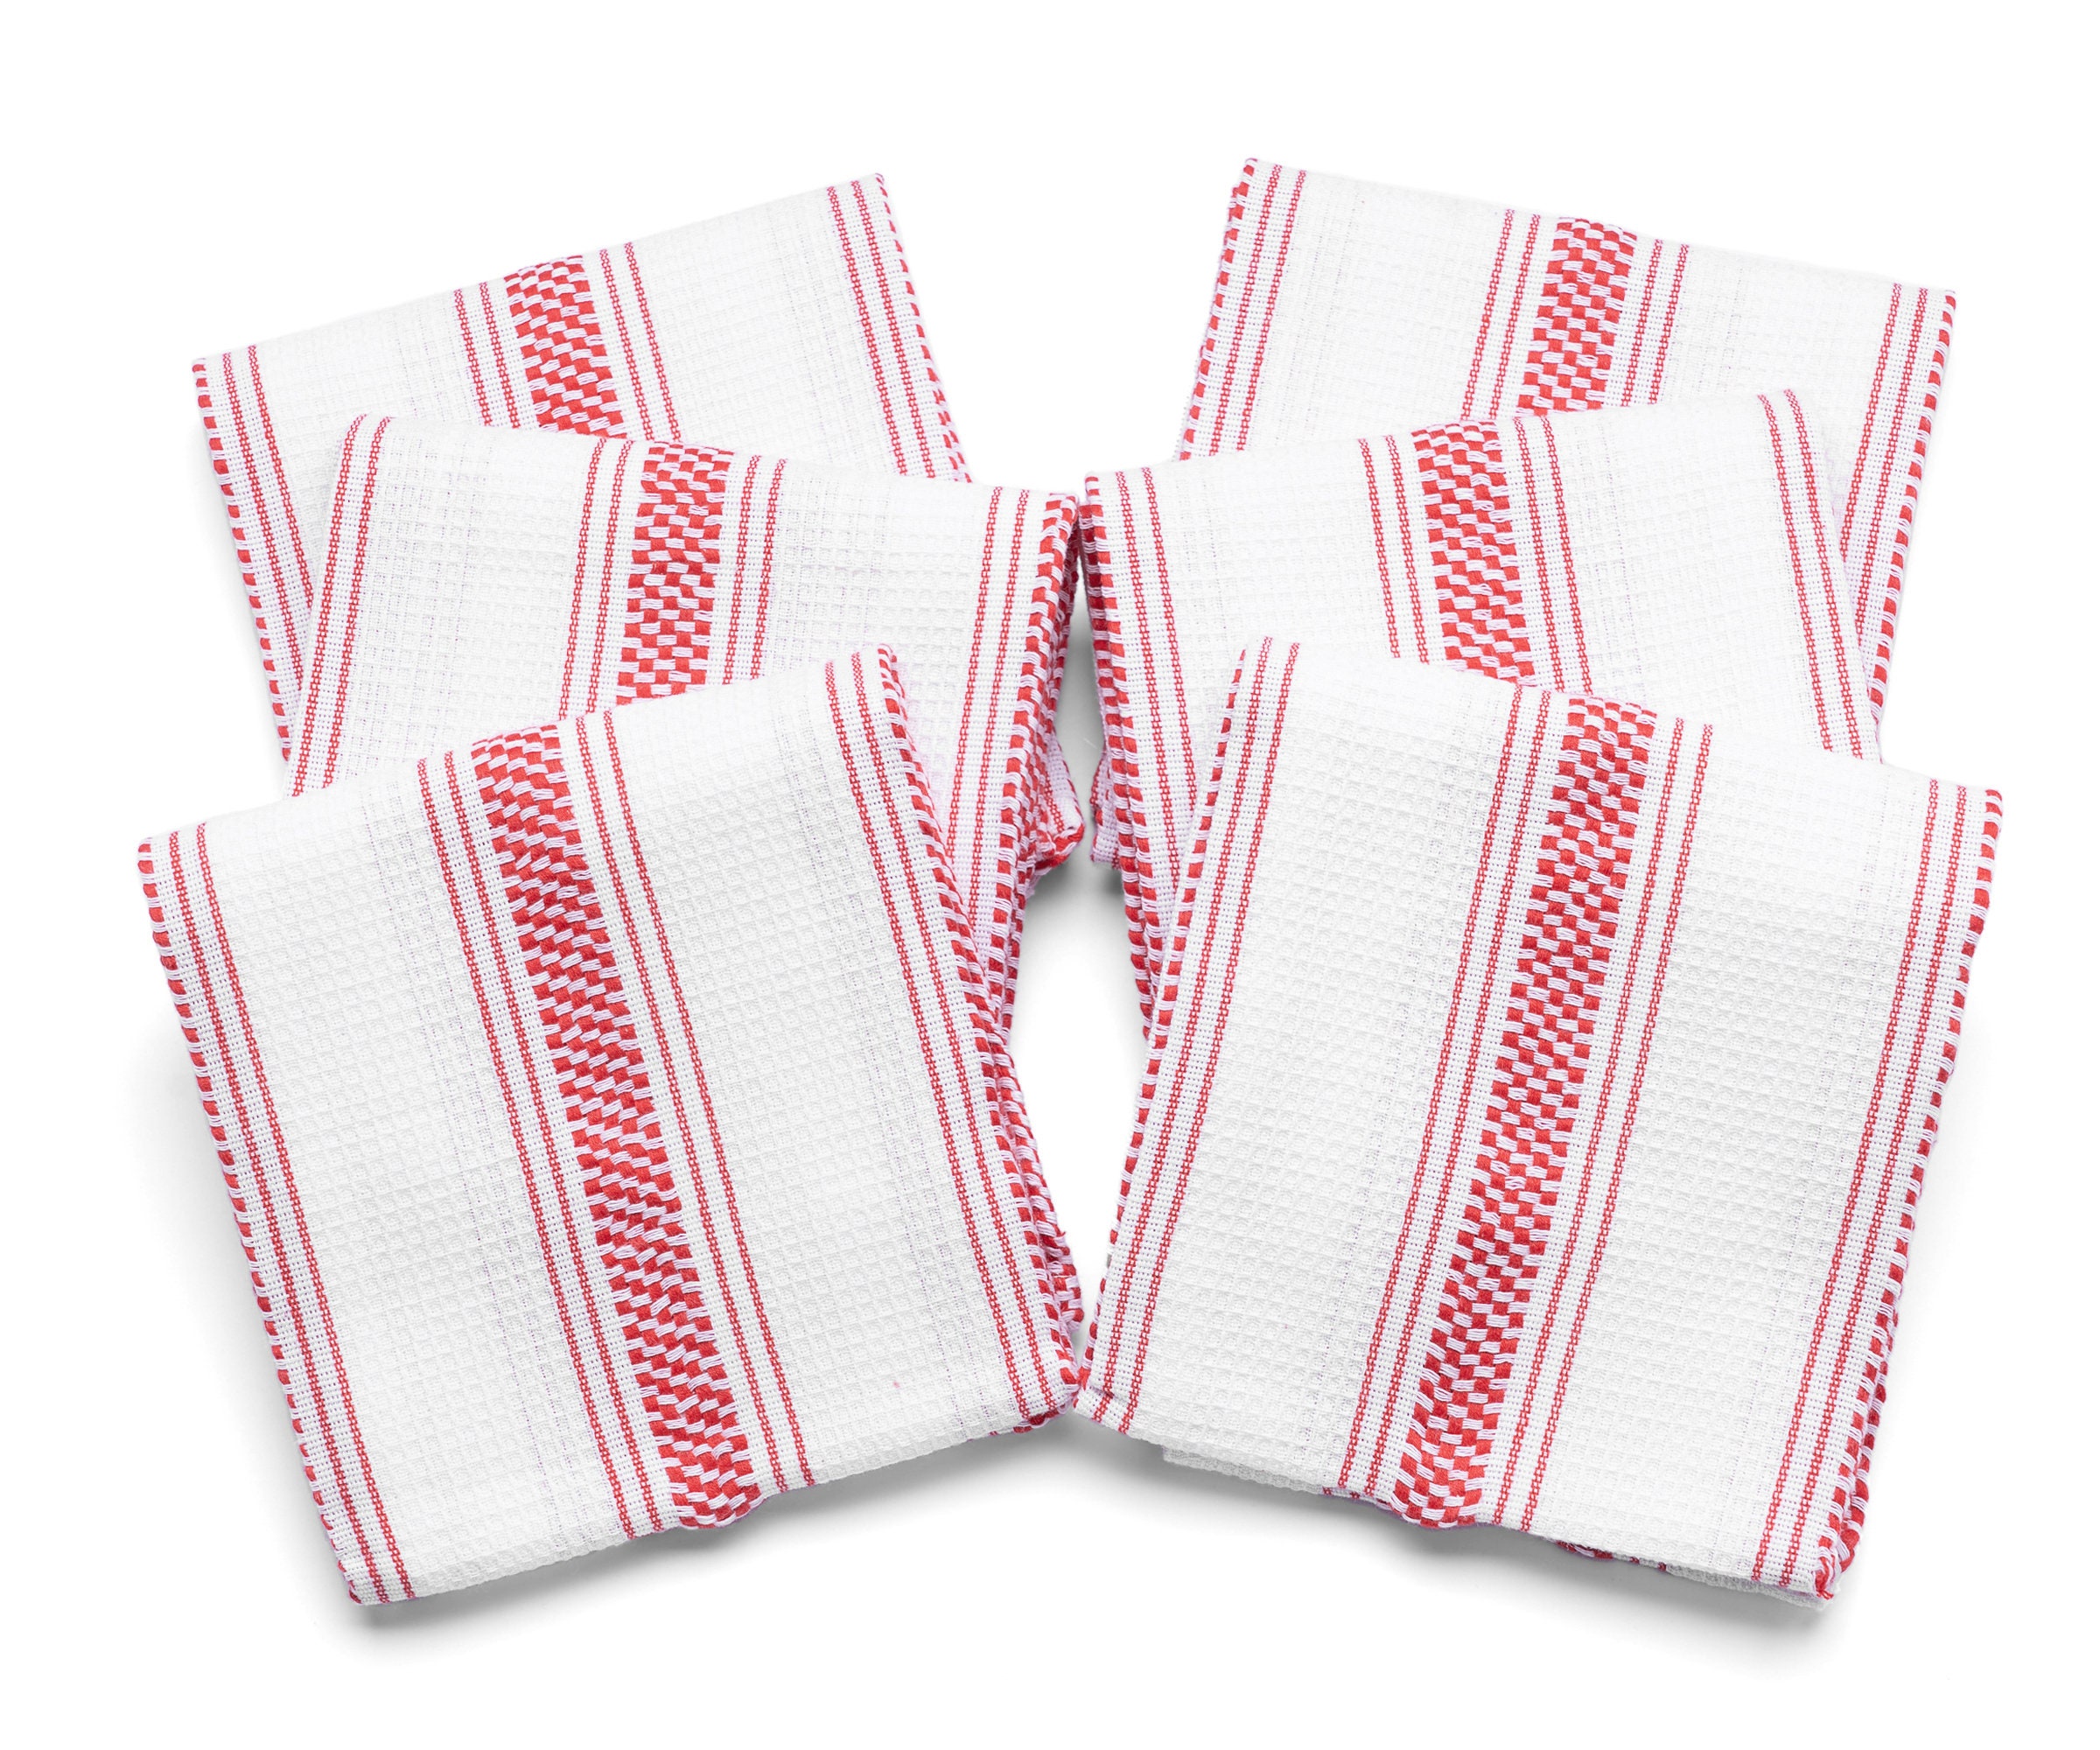 Kitchen Towels Set of 6 Cotton Dish Towels Absorbent Hand Towels Striped  Hanging Towels Bulk Linen Tea Towel Farmhouse Dish Towels 